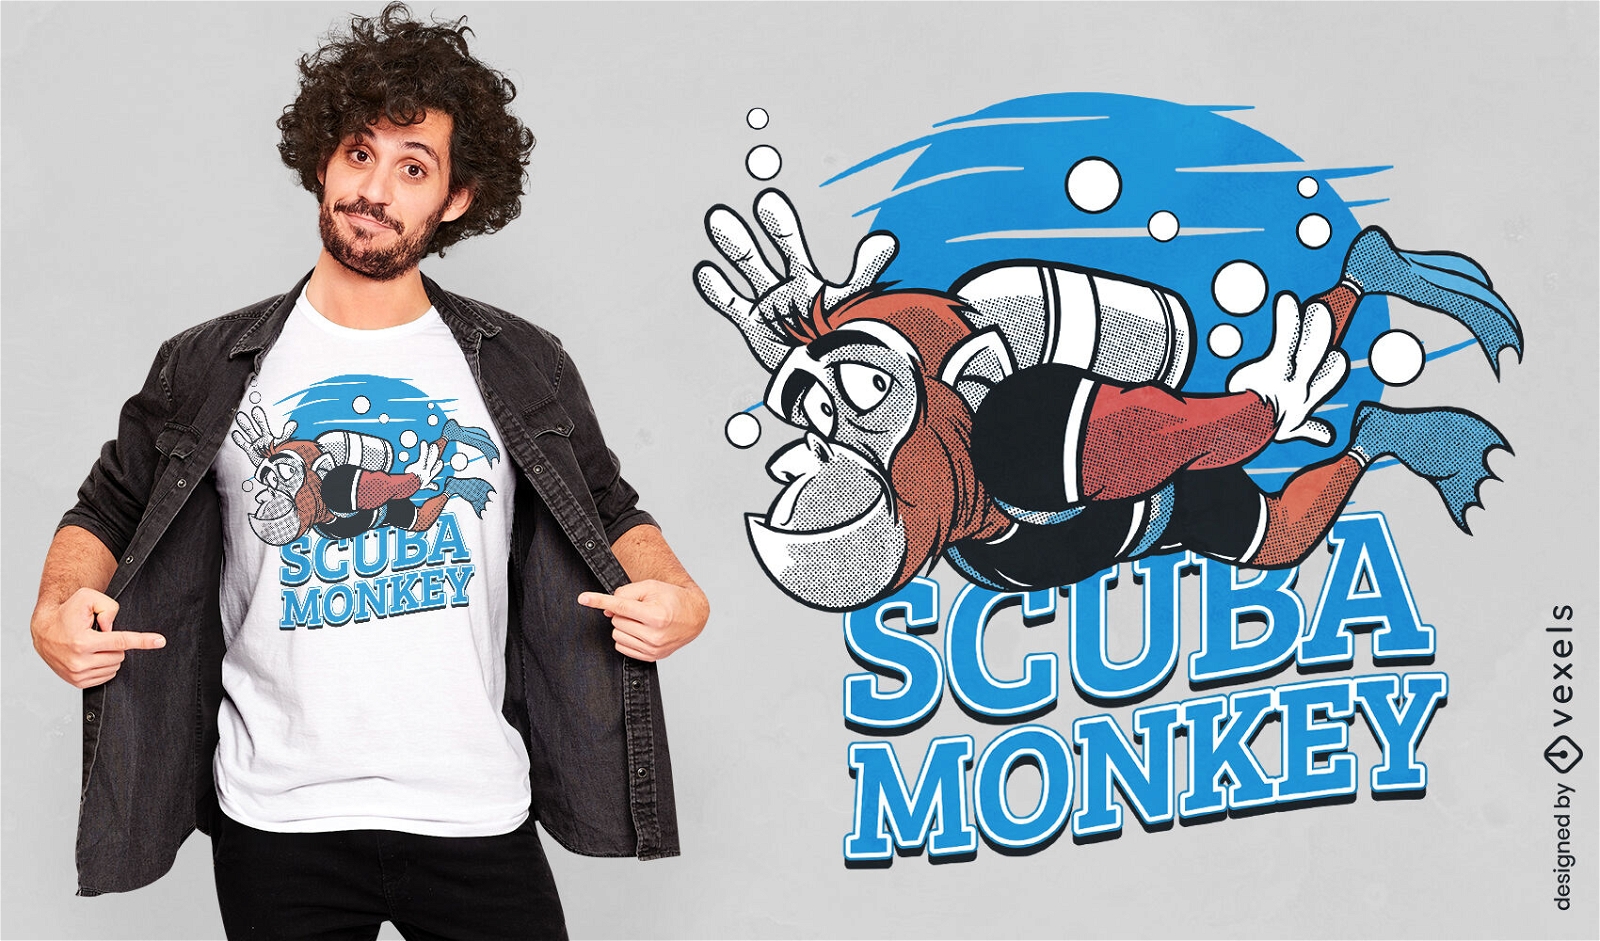 Monkey scuba diving t-shirt design